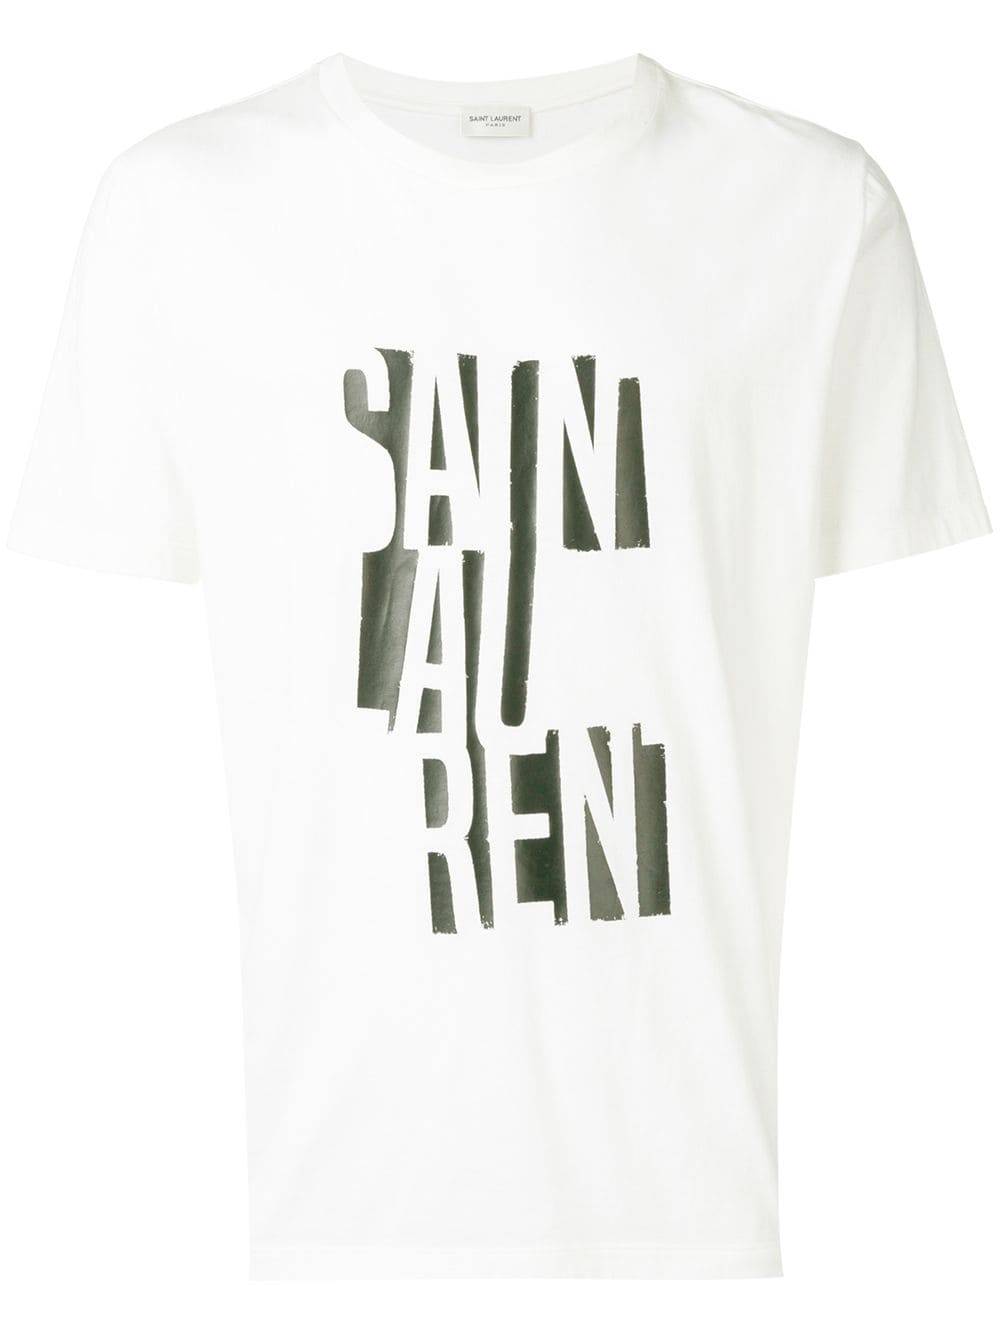 Deconstructed Logo - Saint Laurent Deconstructed Logo T-Shirt - White